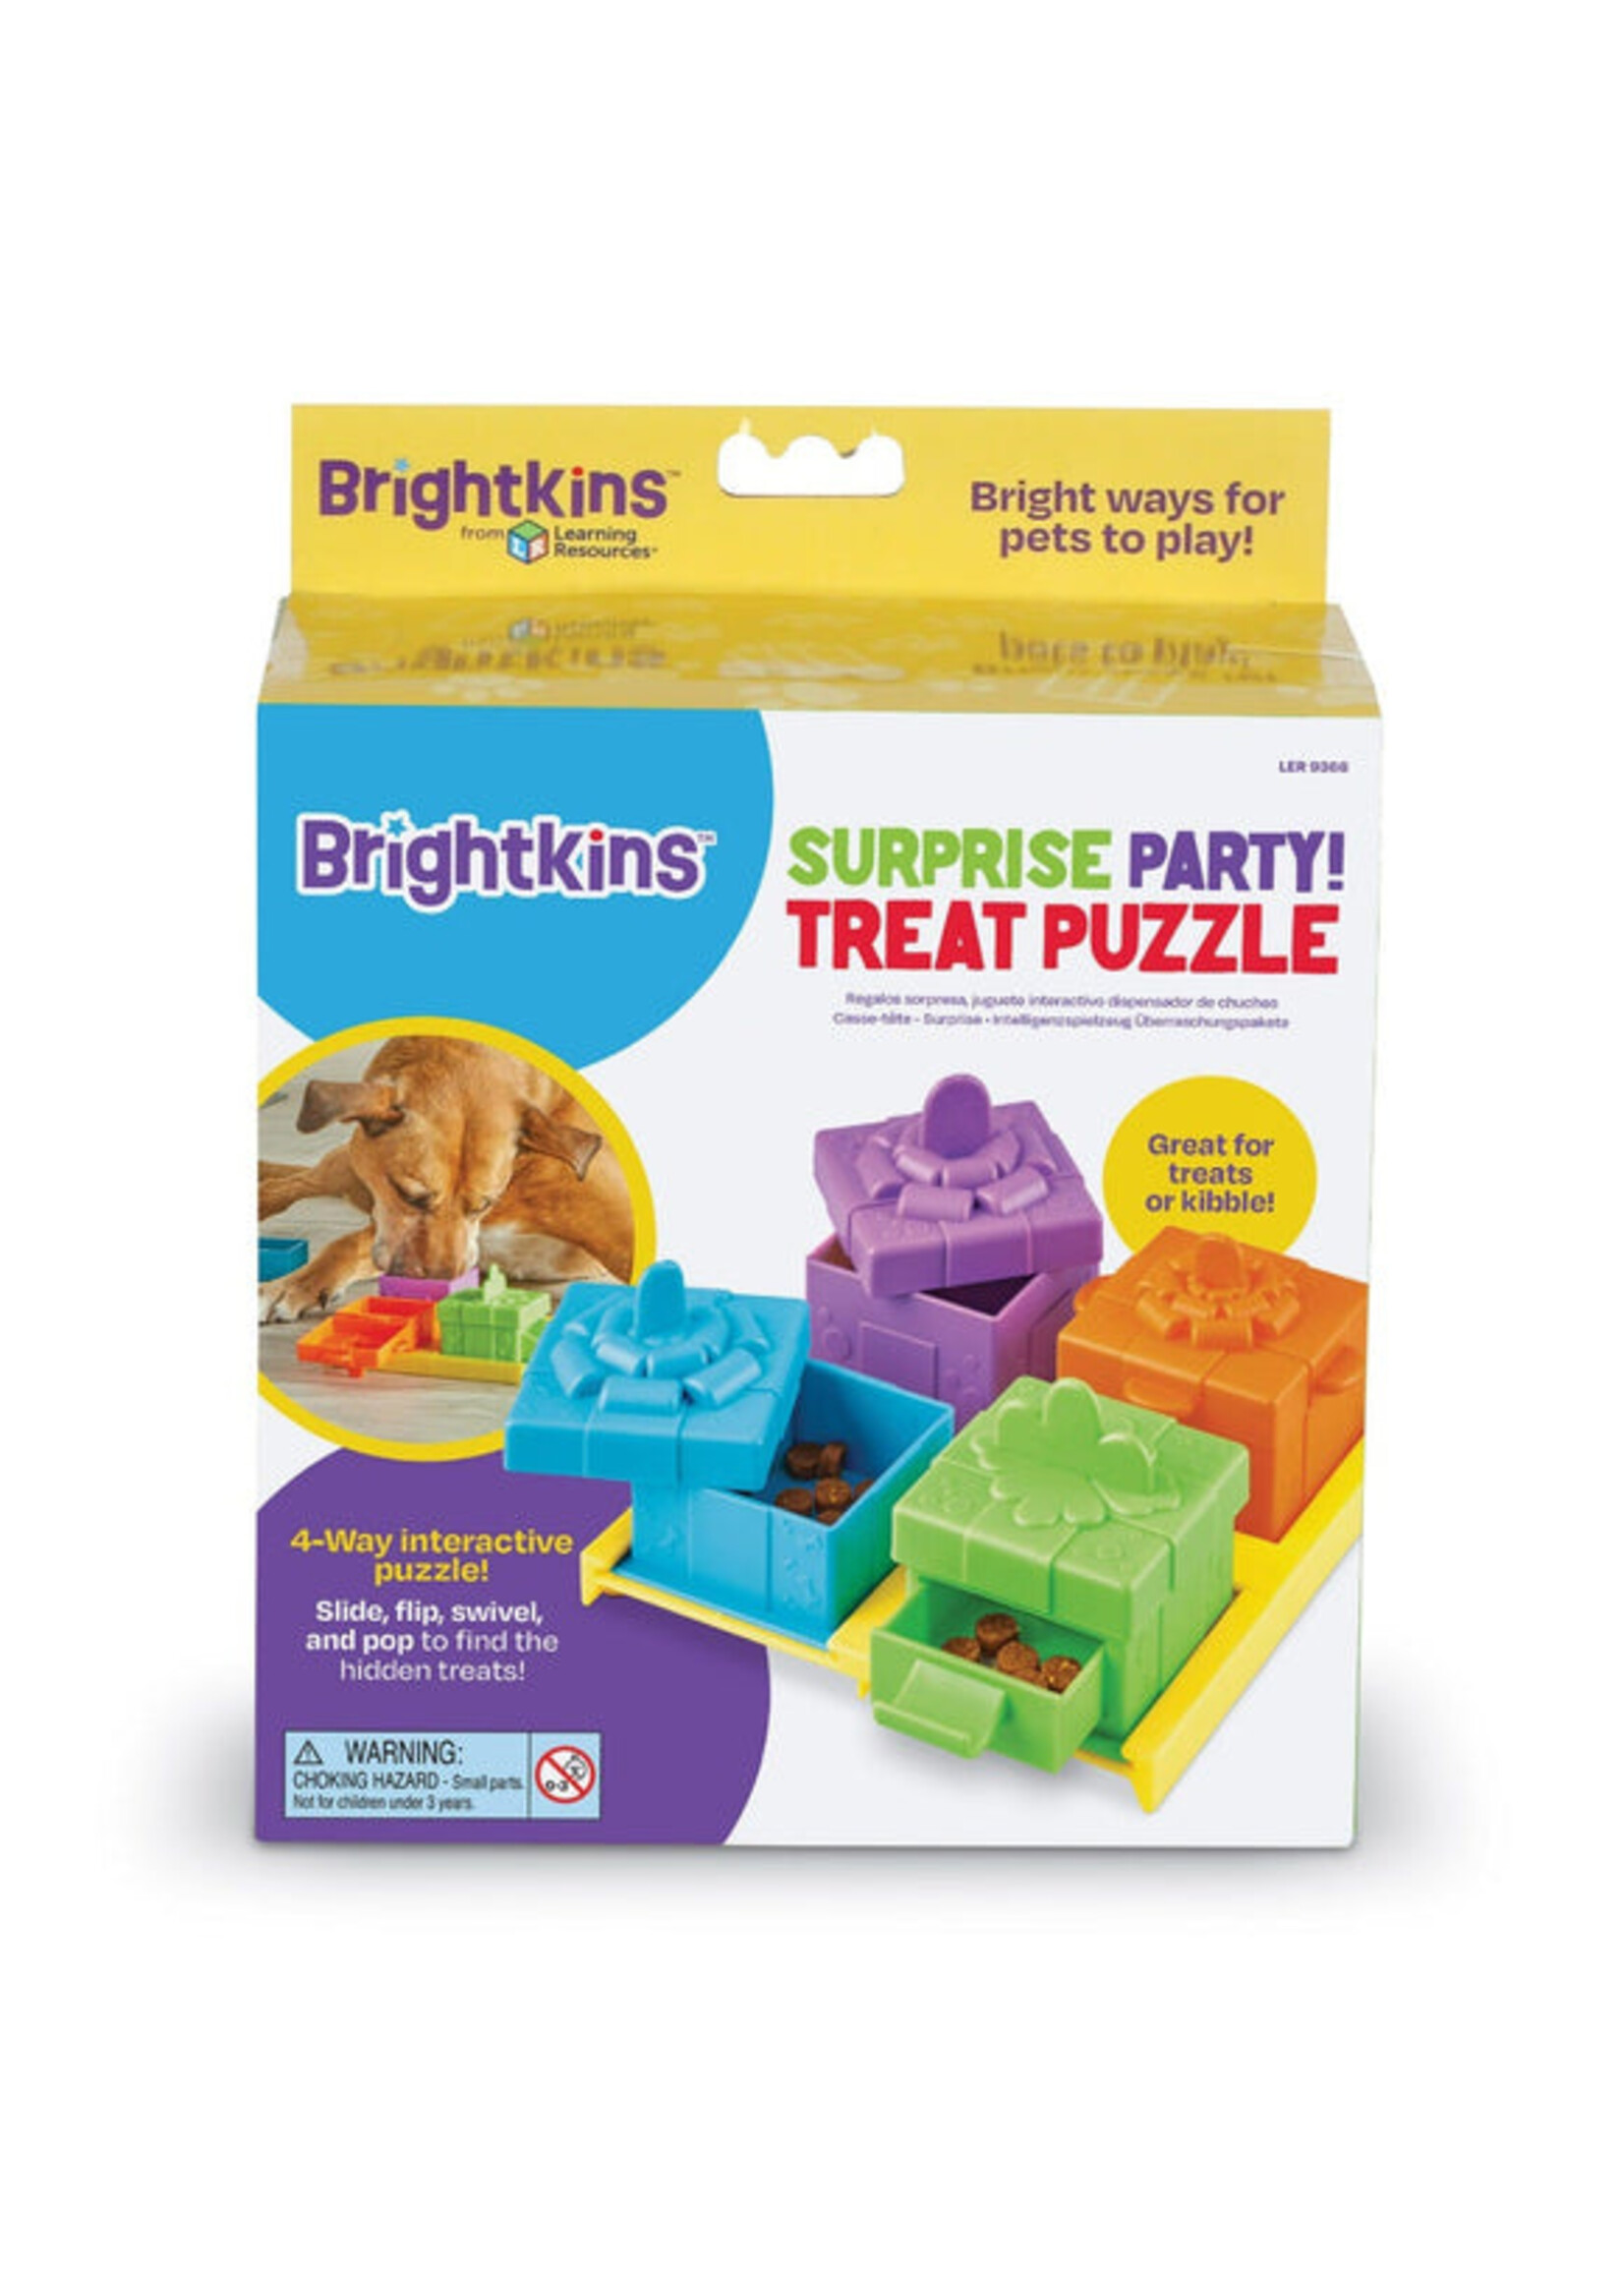 Brightkins Surprise Party Treat Puzzle